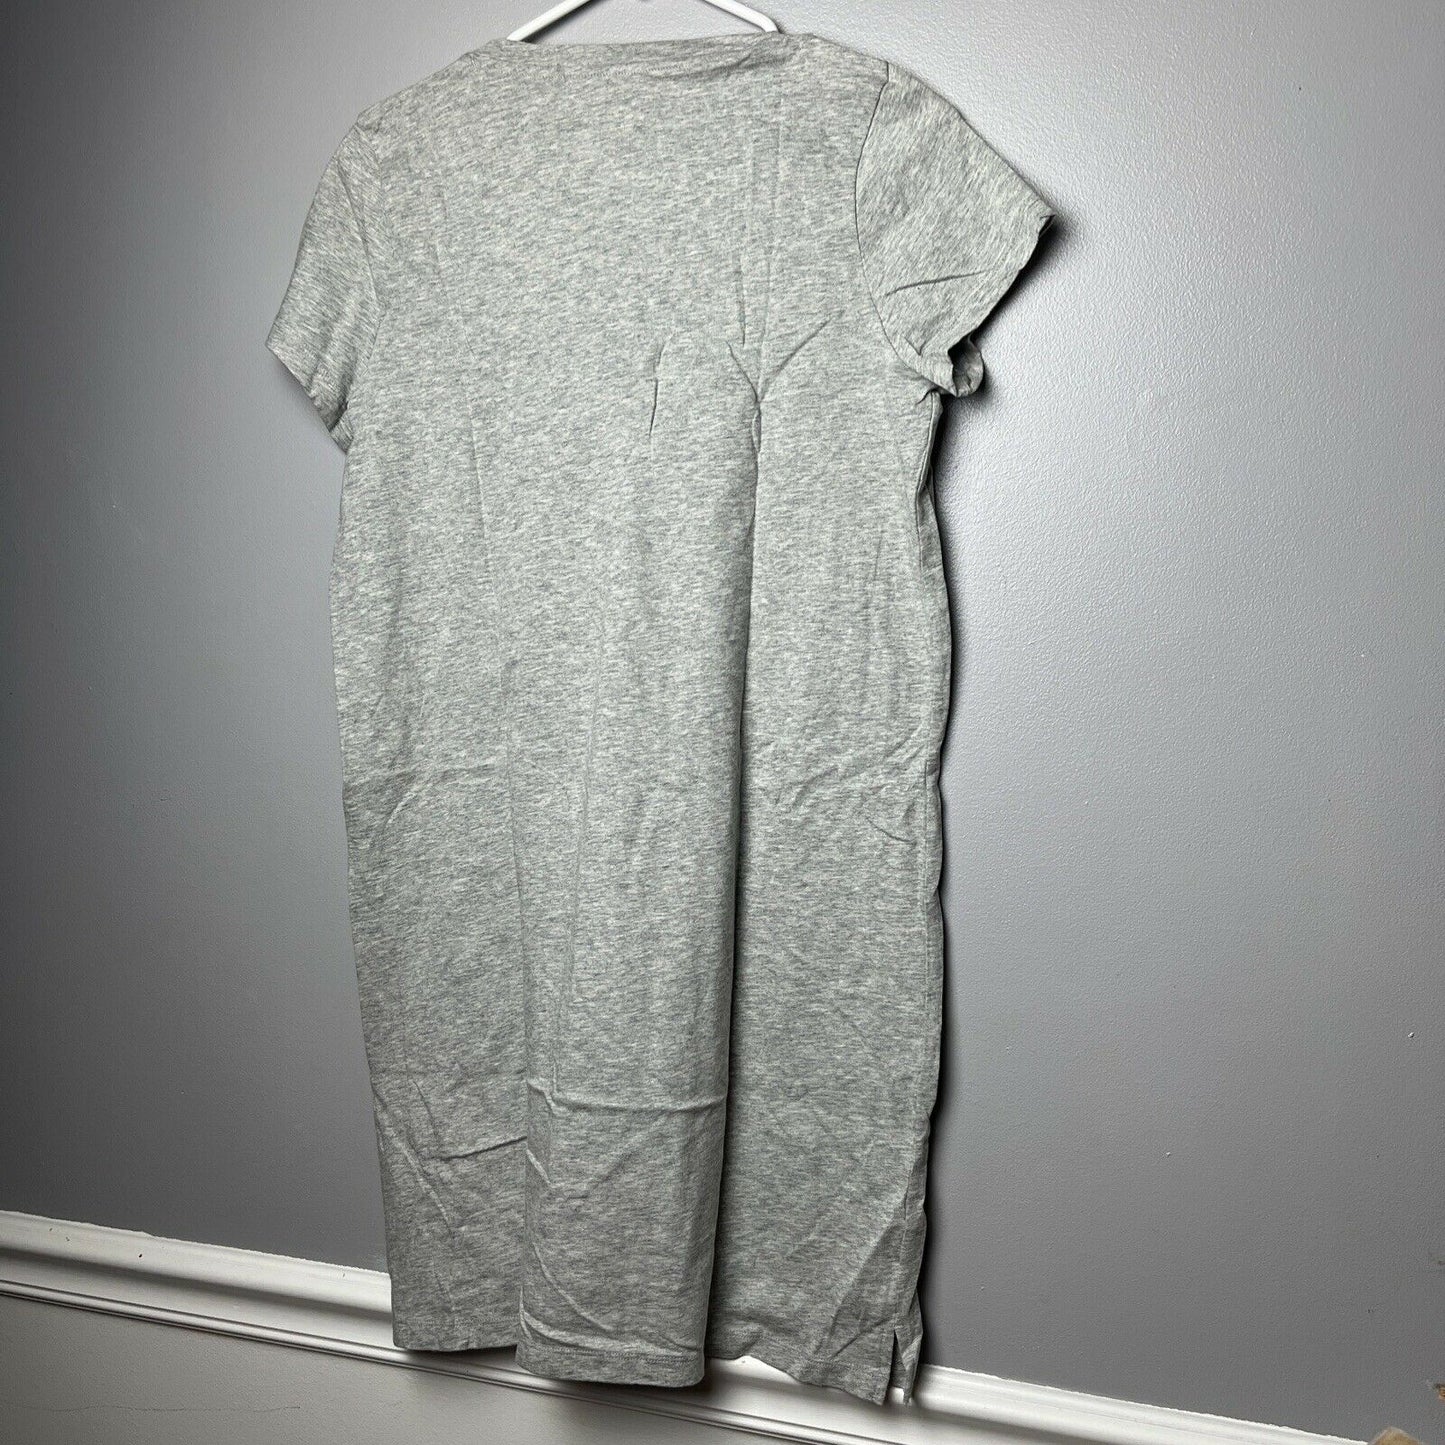 Madewell Gray Northside Vintage V-Neck T-Shirt Dress, Size S